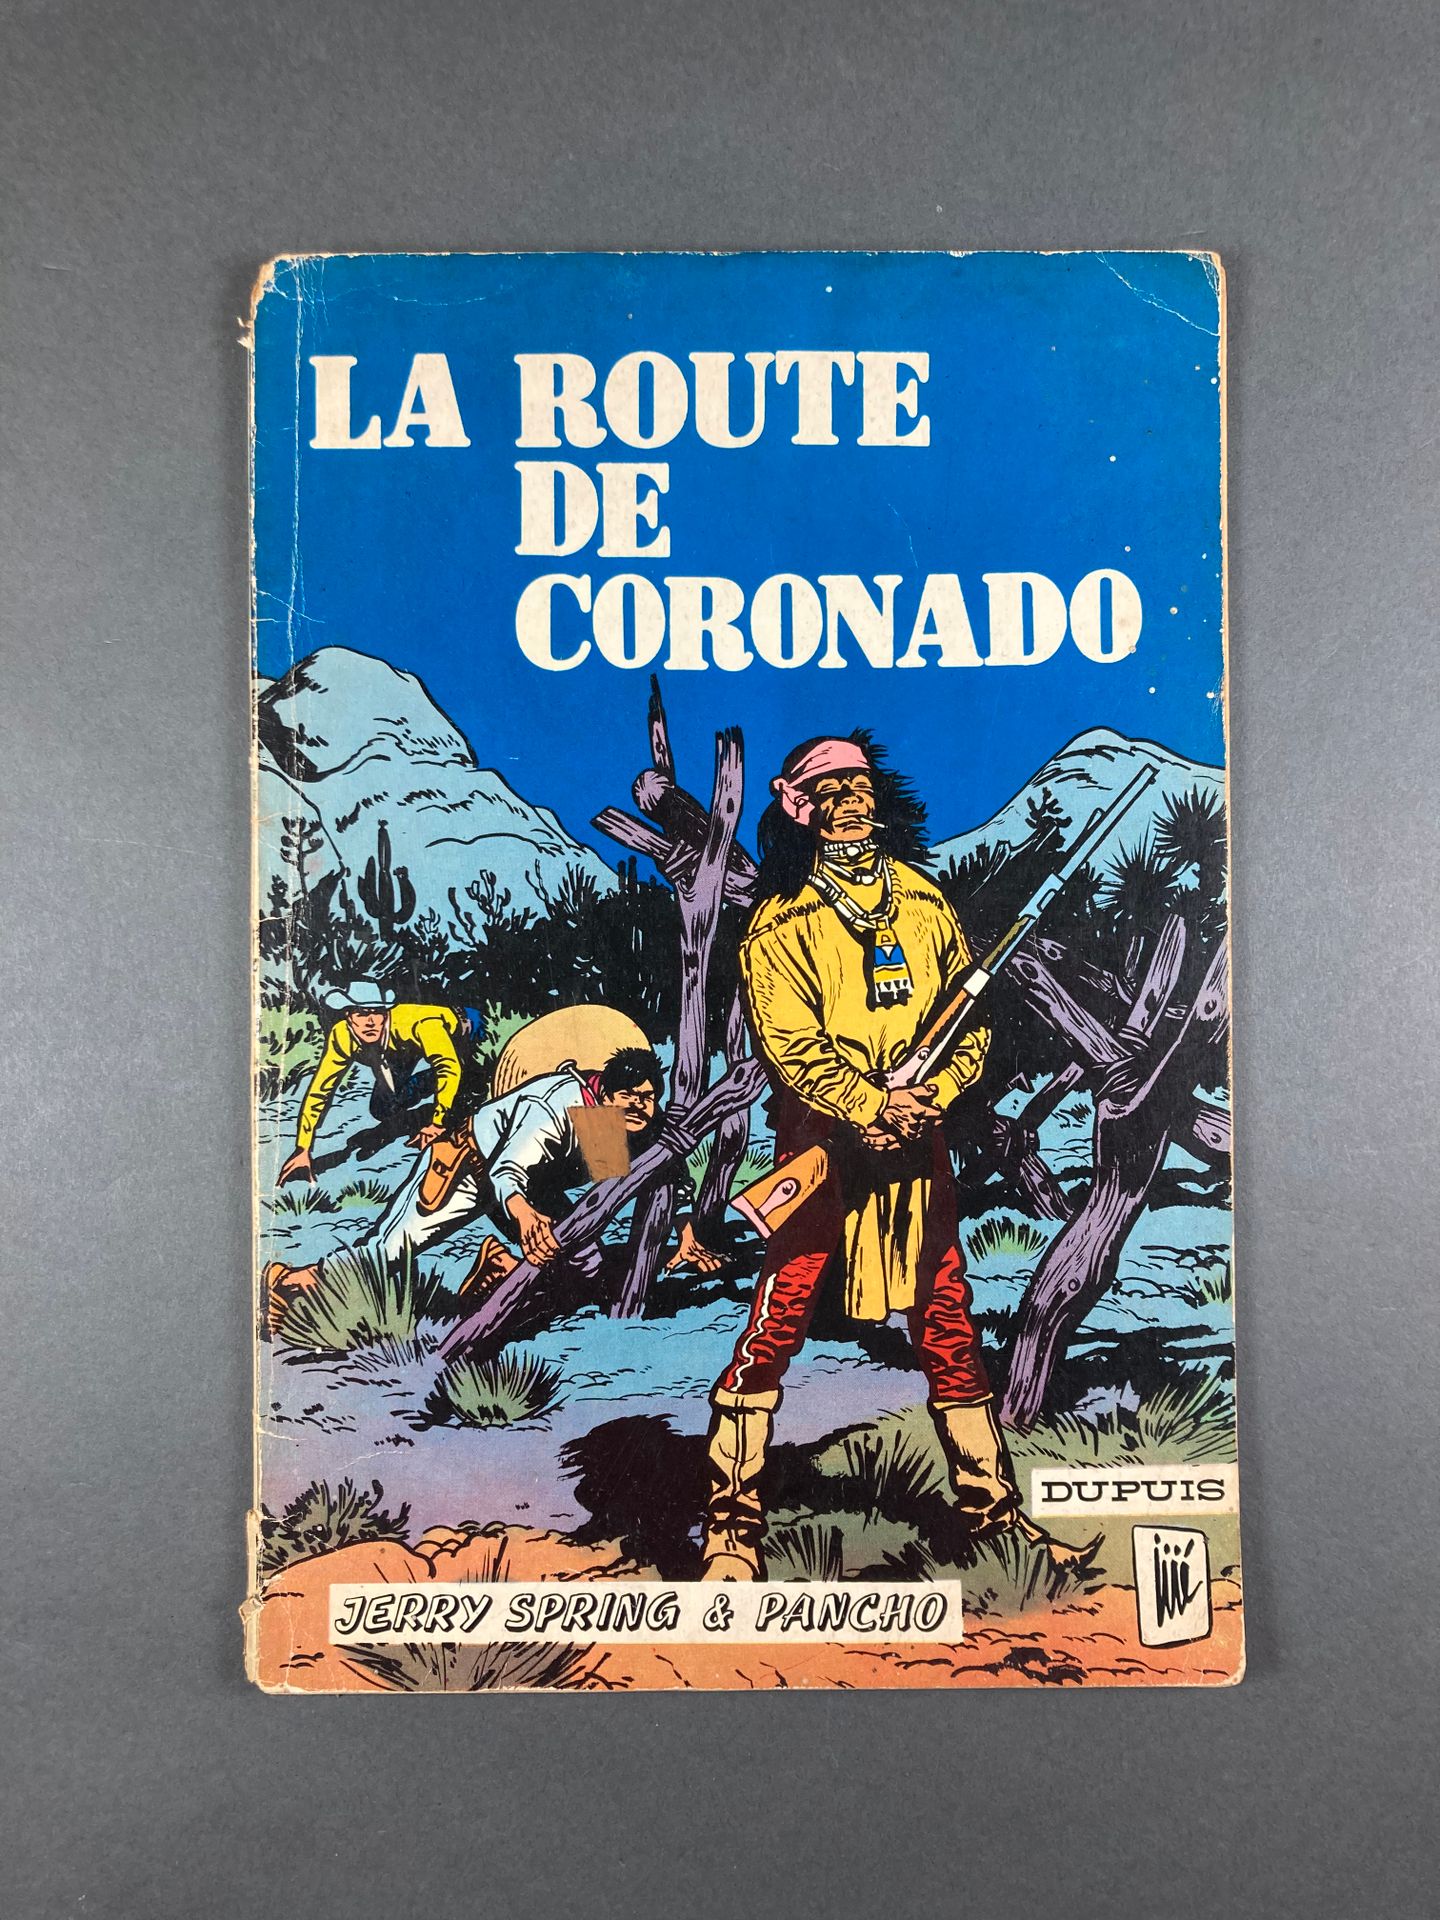 JIJÉ - Jerry Spring La route de Coronado, paperback, uncensored EO, 1962, from D&hellip;